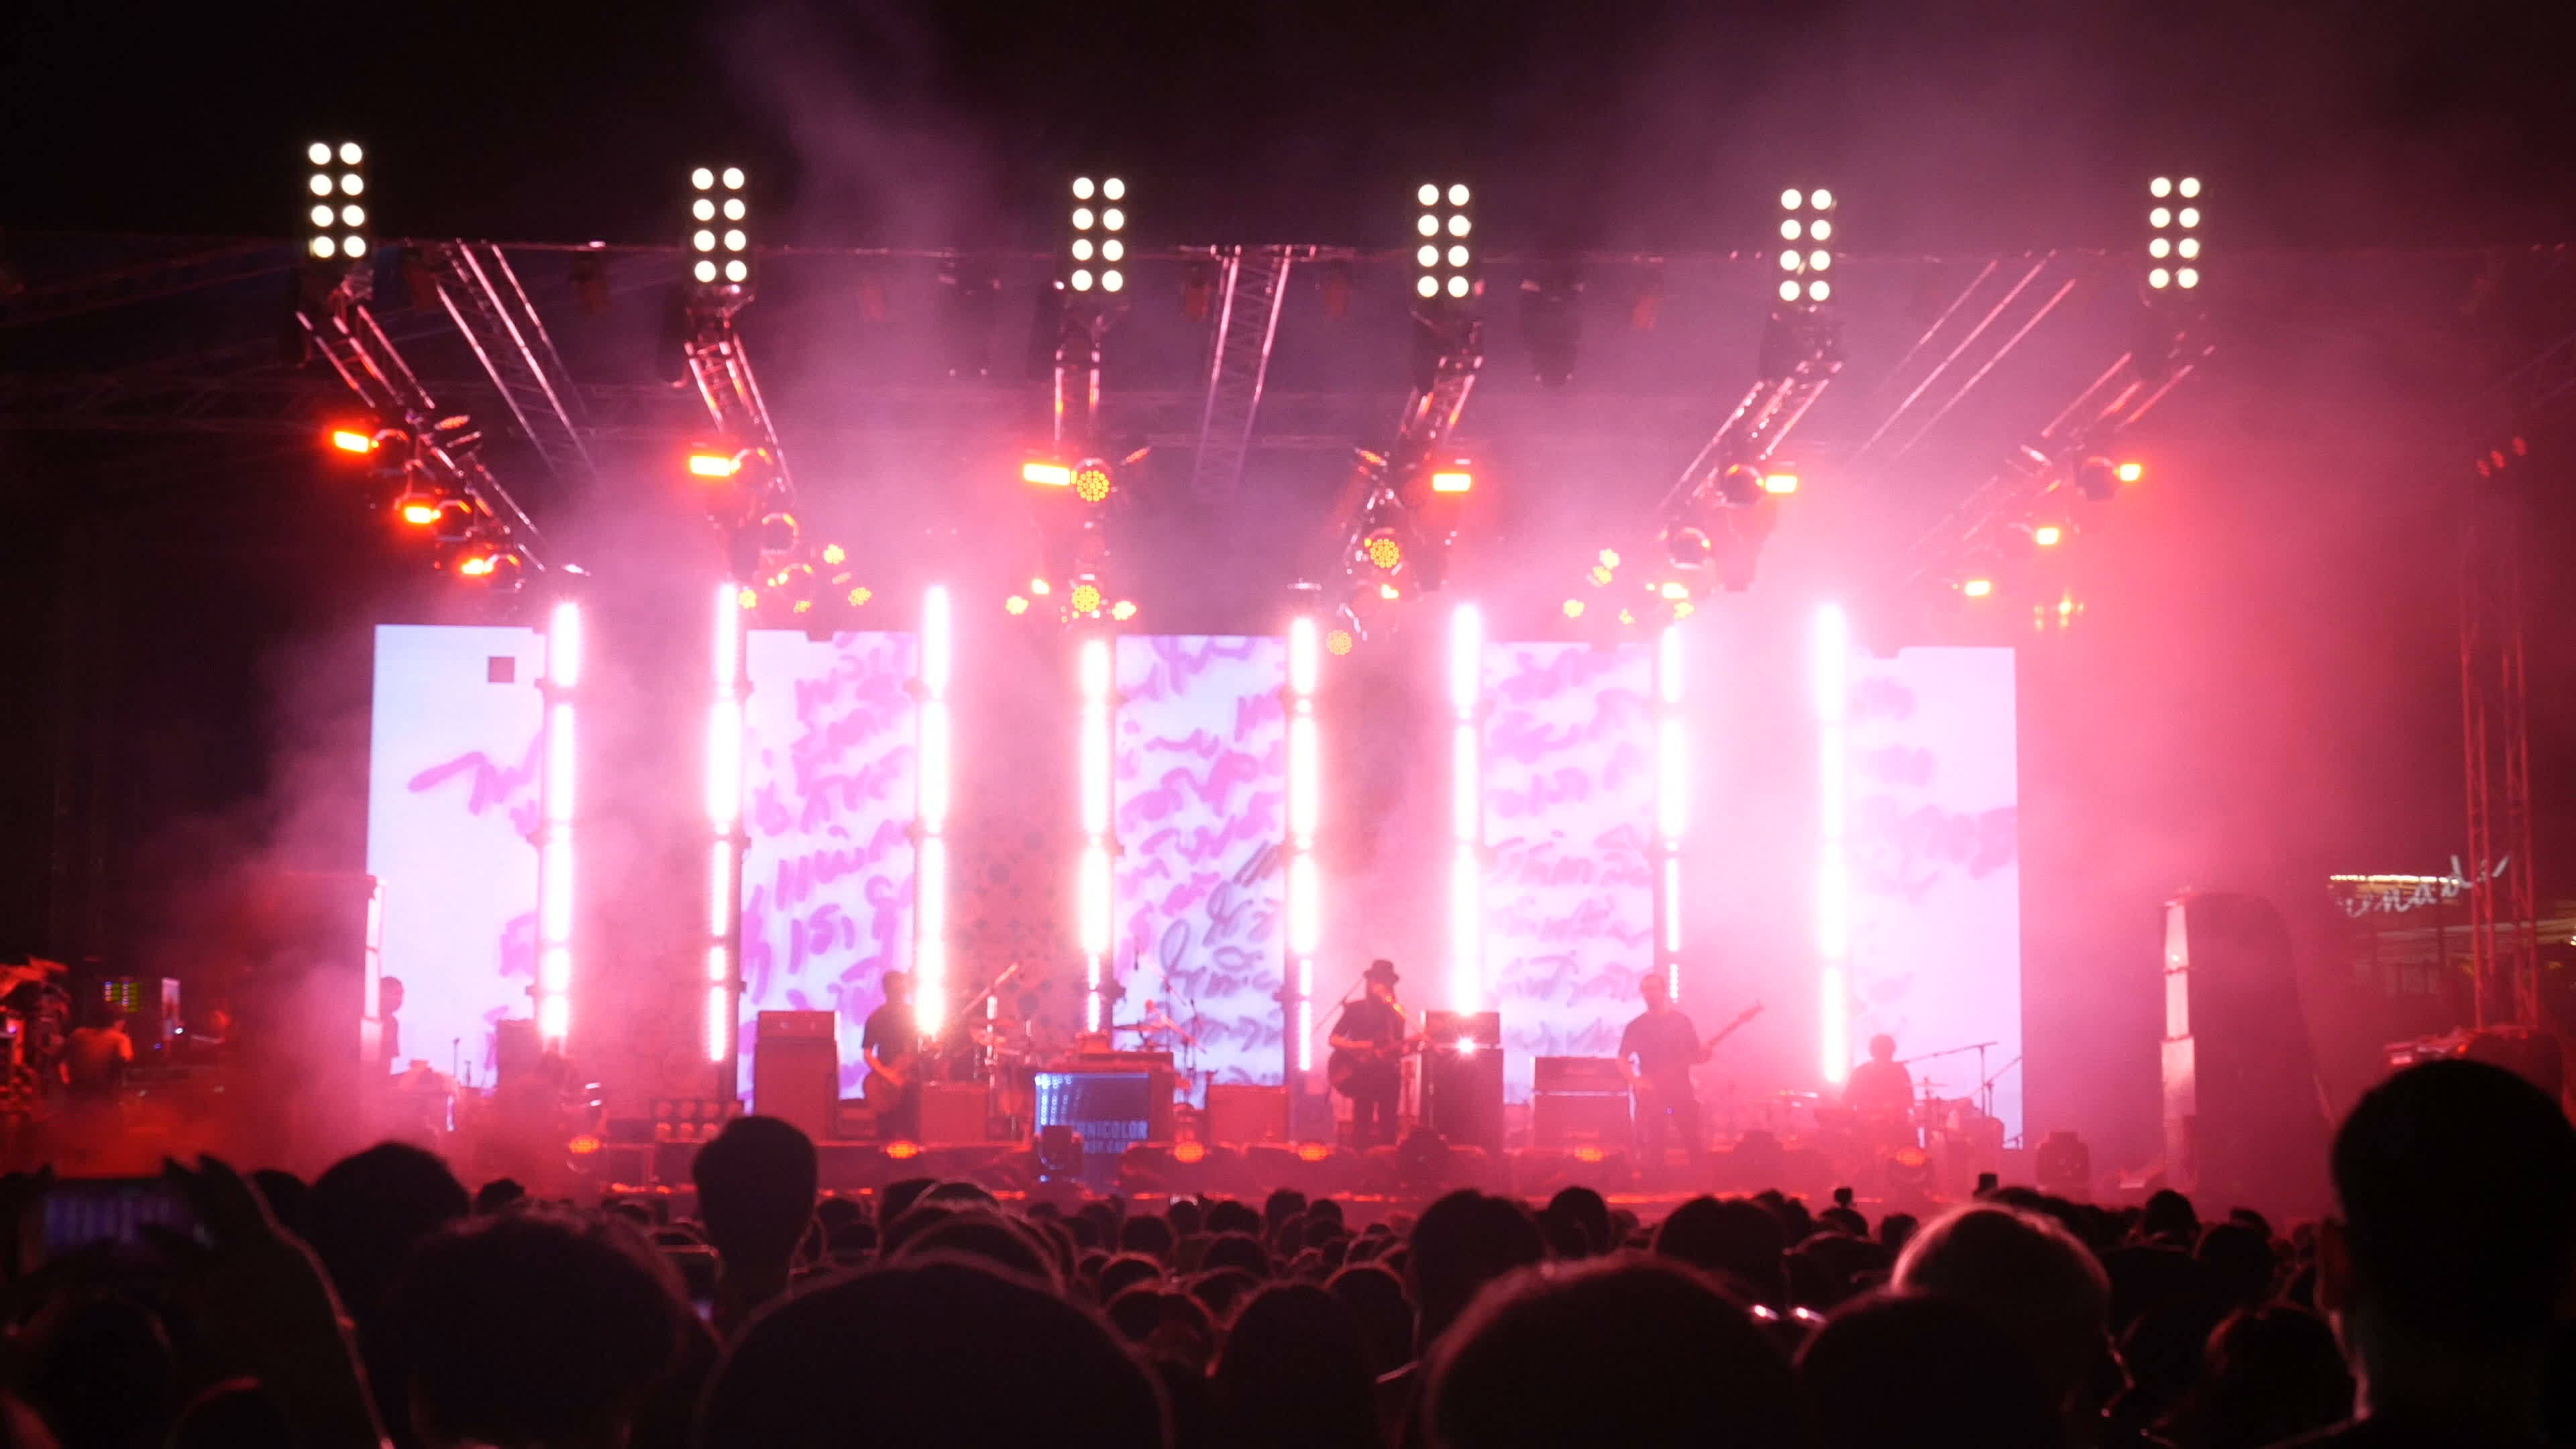 Concert crowd, Blurred stage lights, Dynamic movement, Rock n roll energy, 3840x2160 4K Desktop